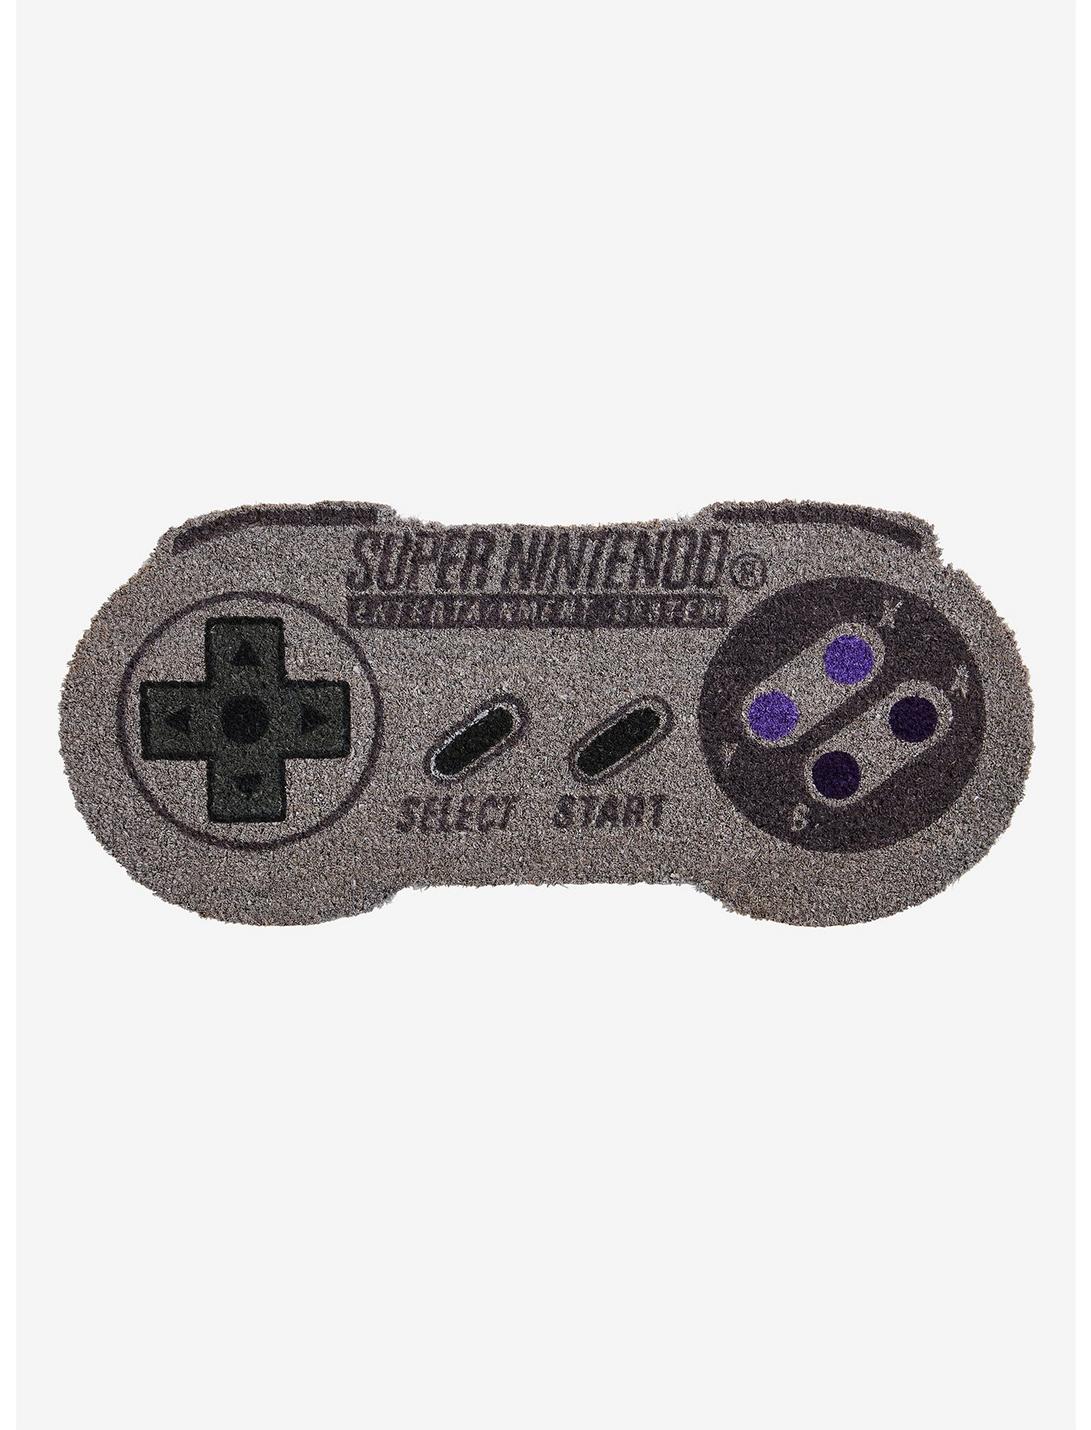 Super Nintendo Entertainment System Controller Doormat, , hi-res